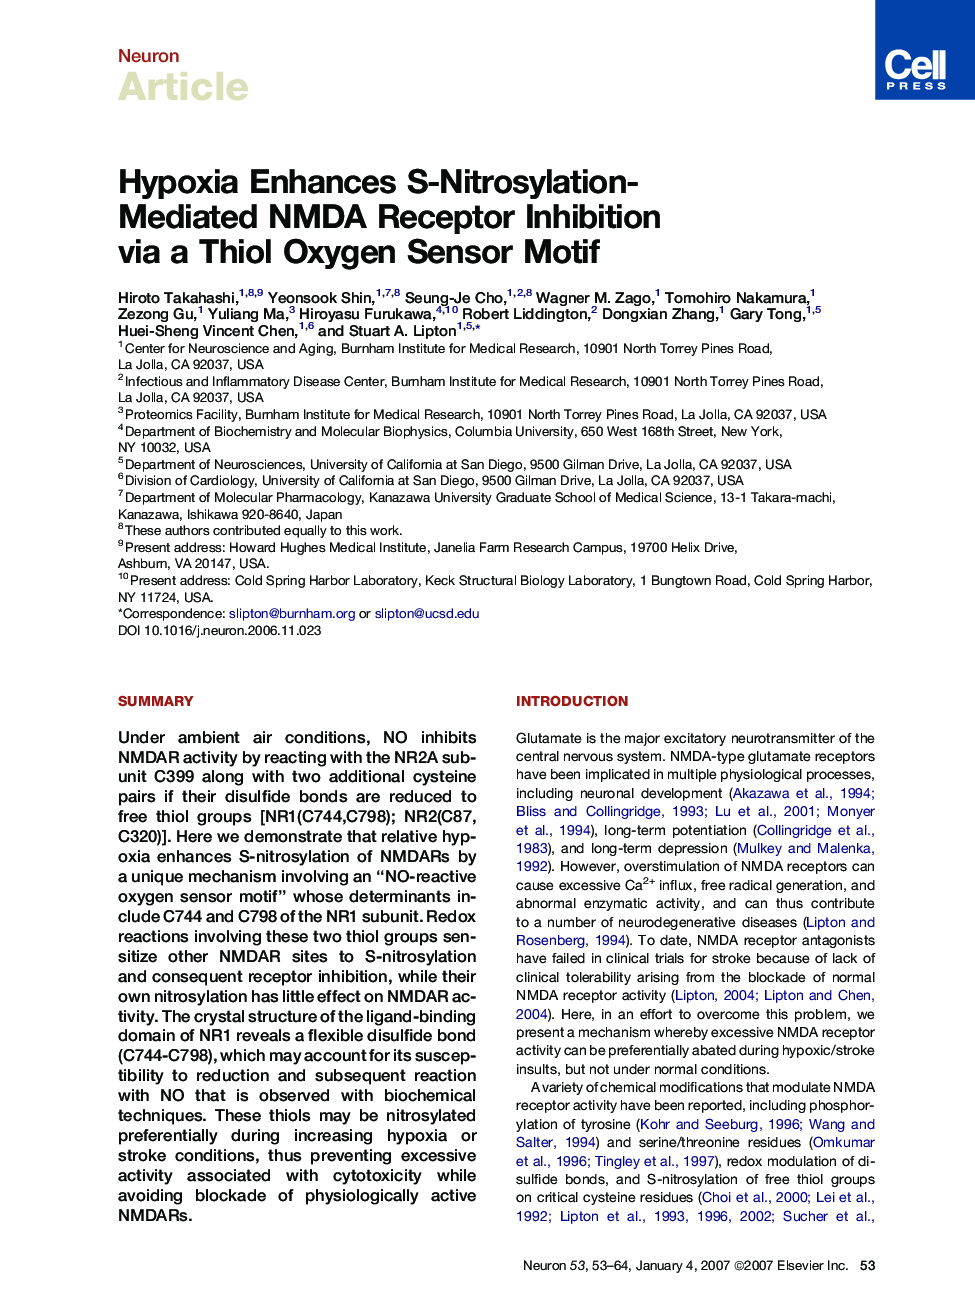 Hypoxia Enhances S-Nitrosylation-Mediated NMDA Receptor Inhibition via a Thiol Oxygen Sensor Motif